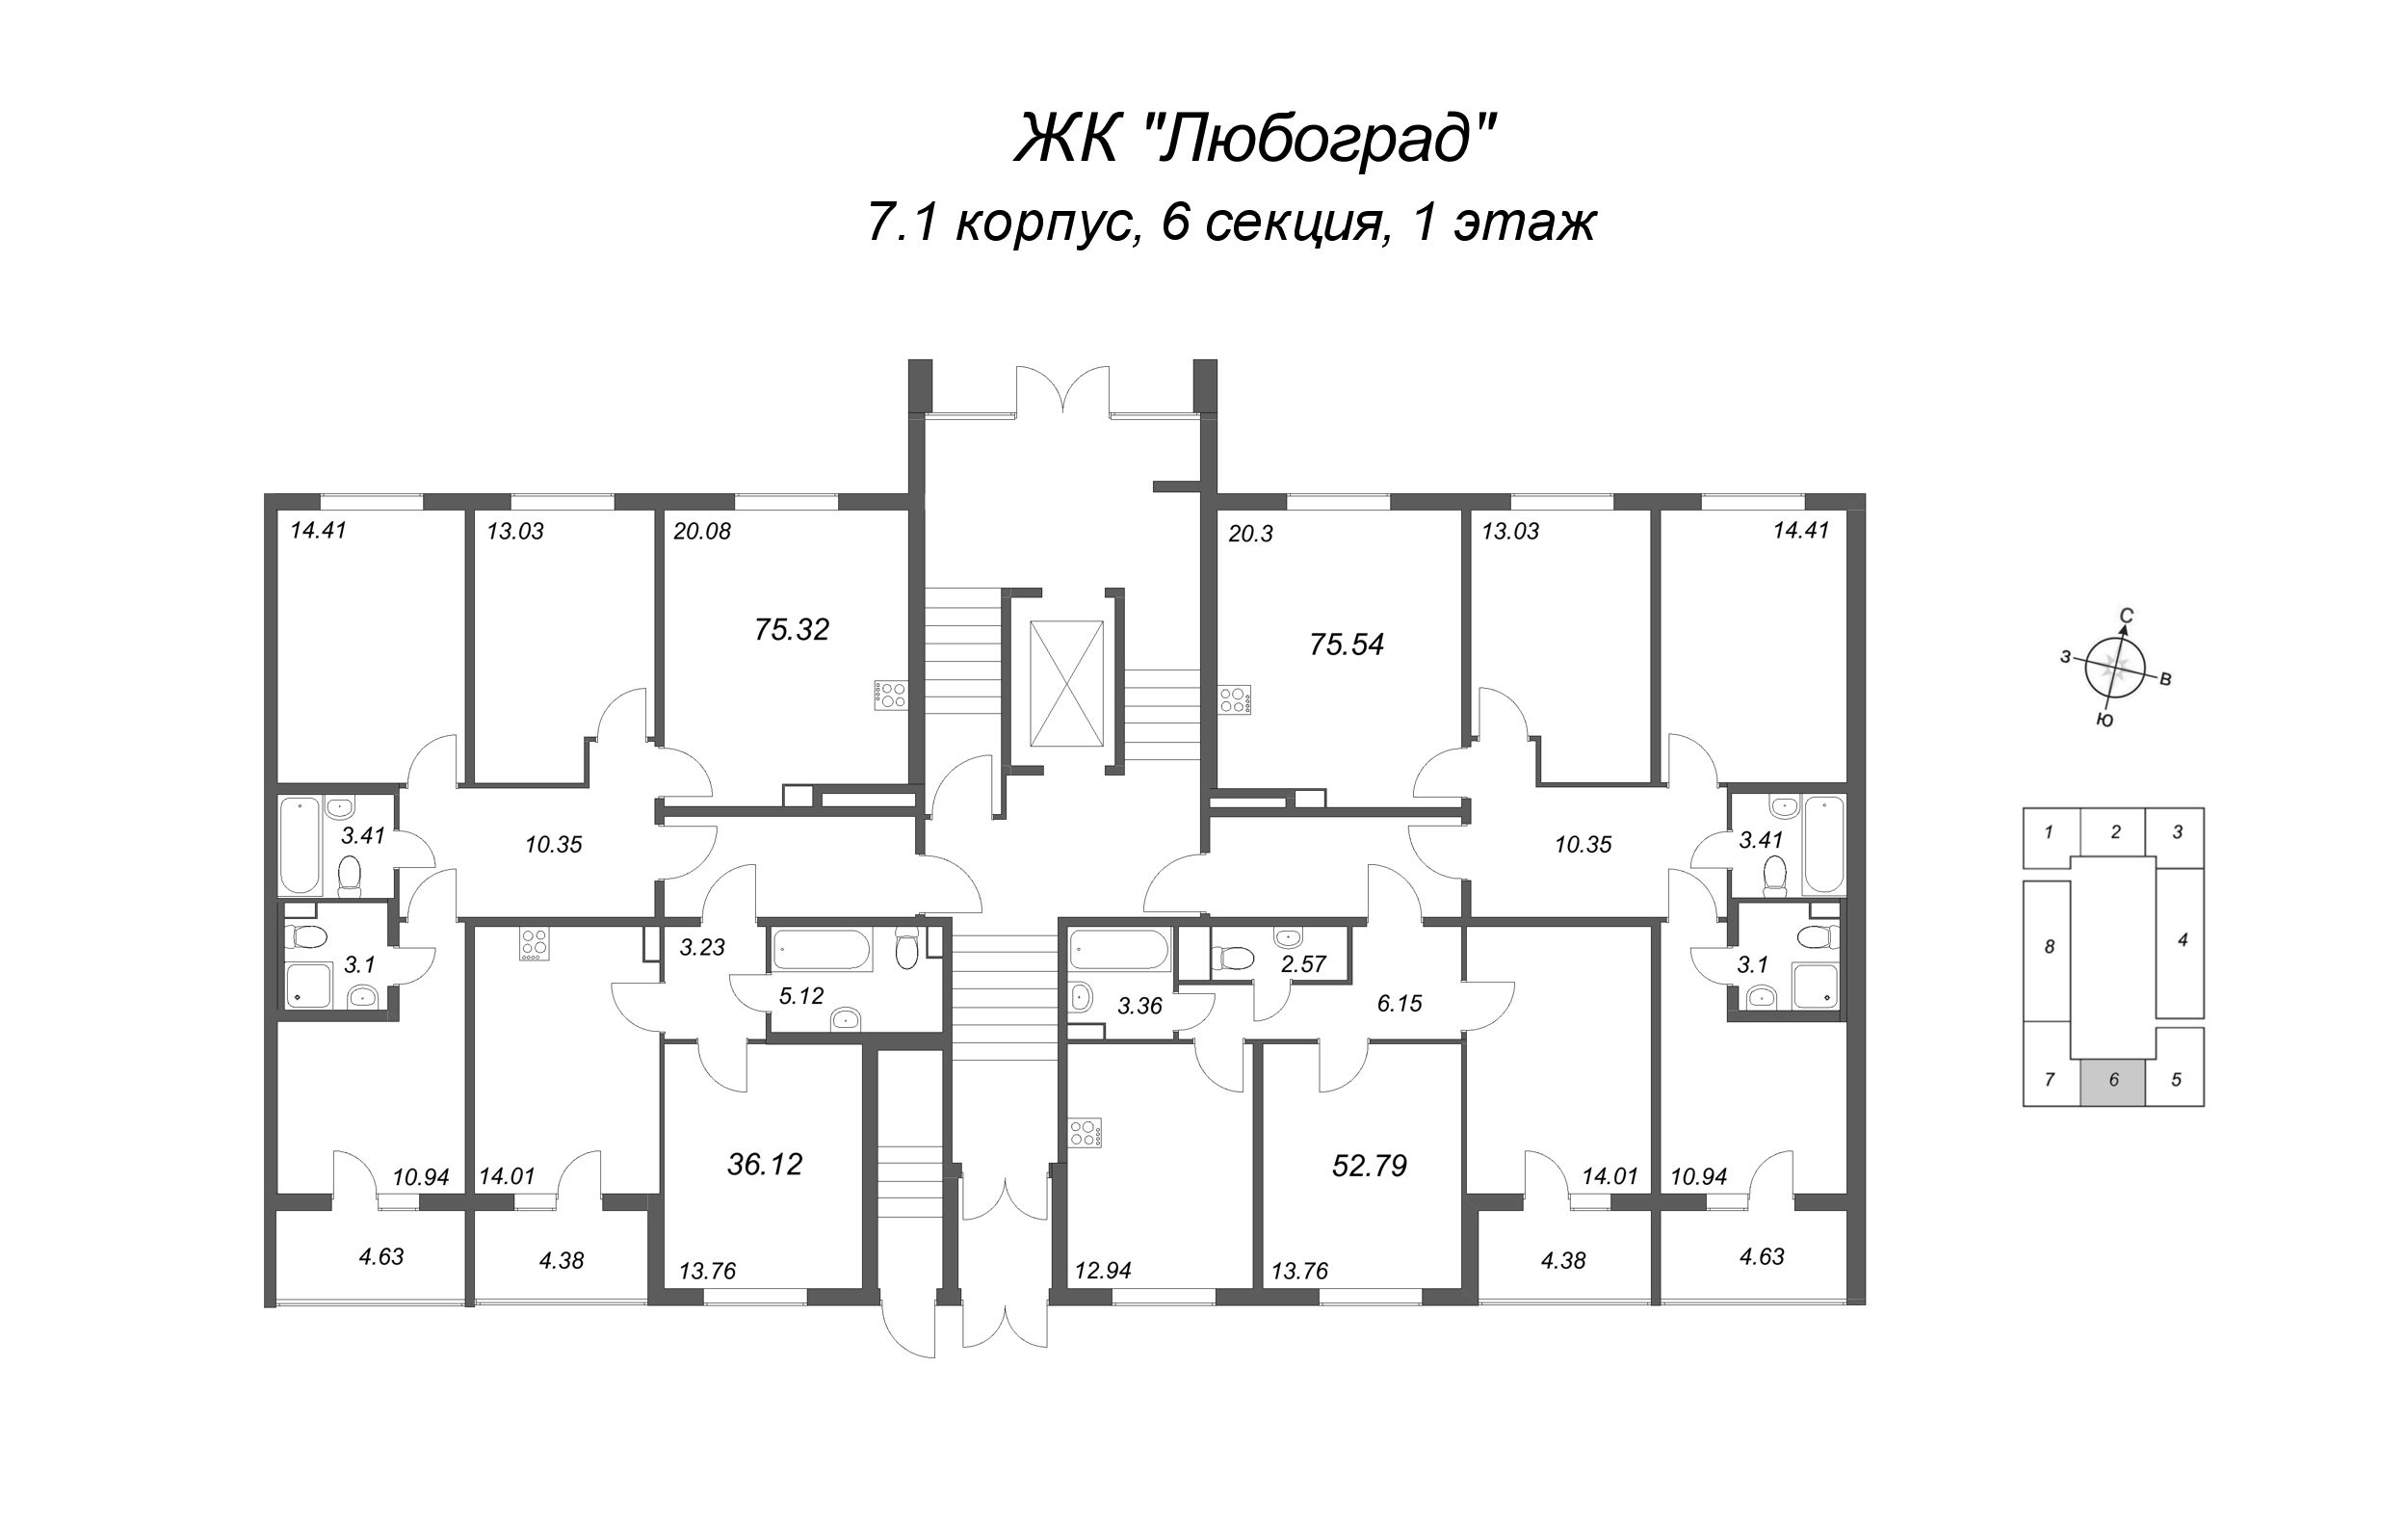 4-комнатная (Евро) квартира, 75.54 м² - планировка этажа